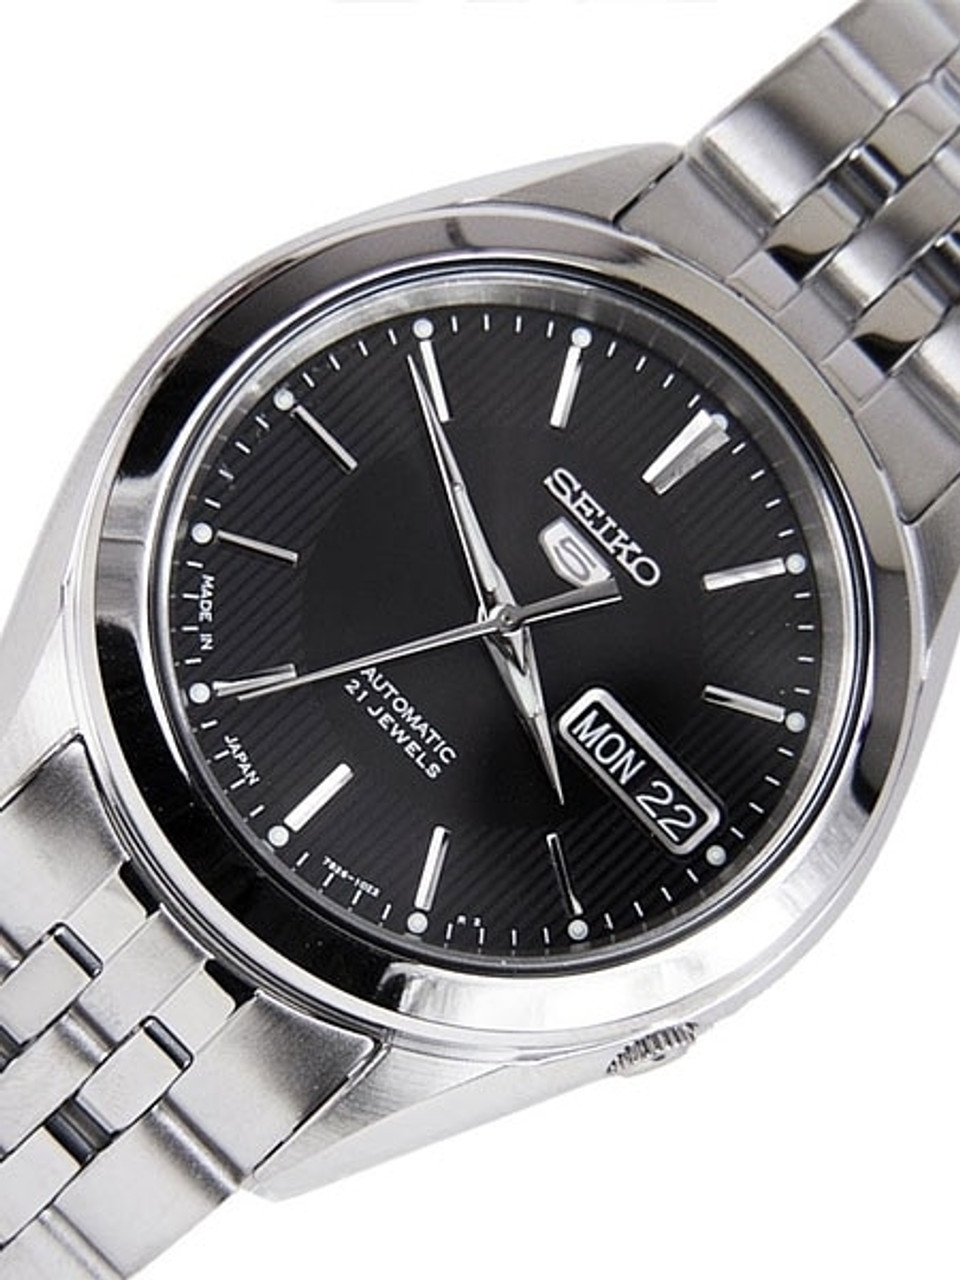 Seiko 5 Automatic Watch with Stainless Steel Bracelet #SNKL23J1